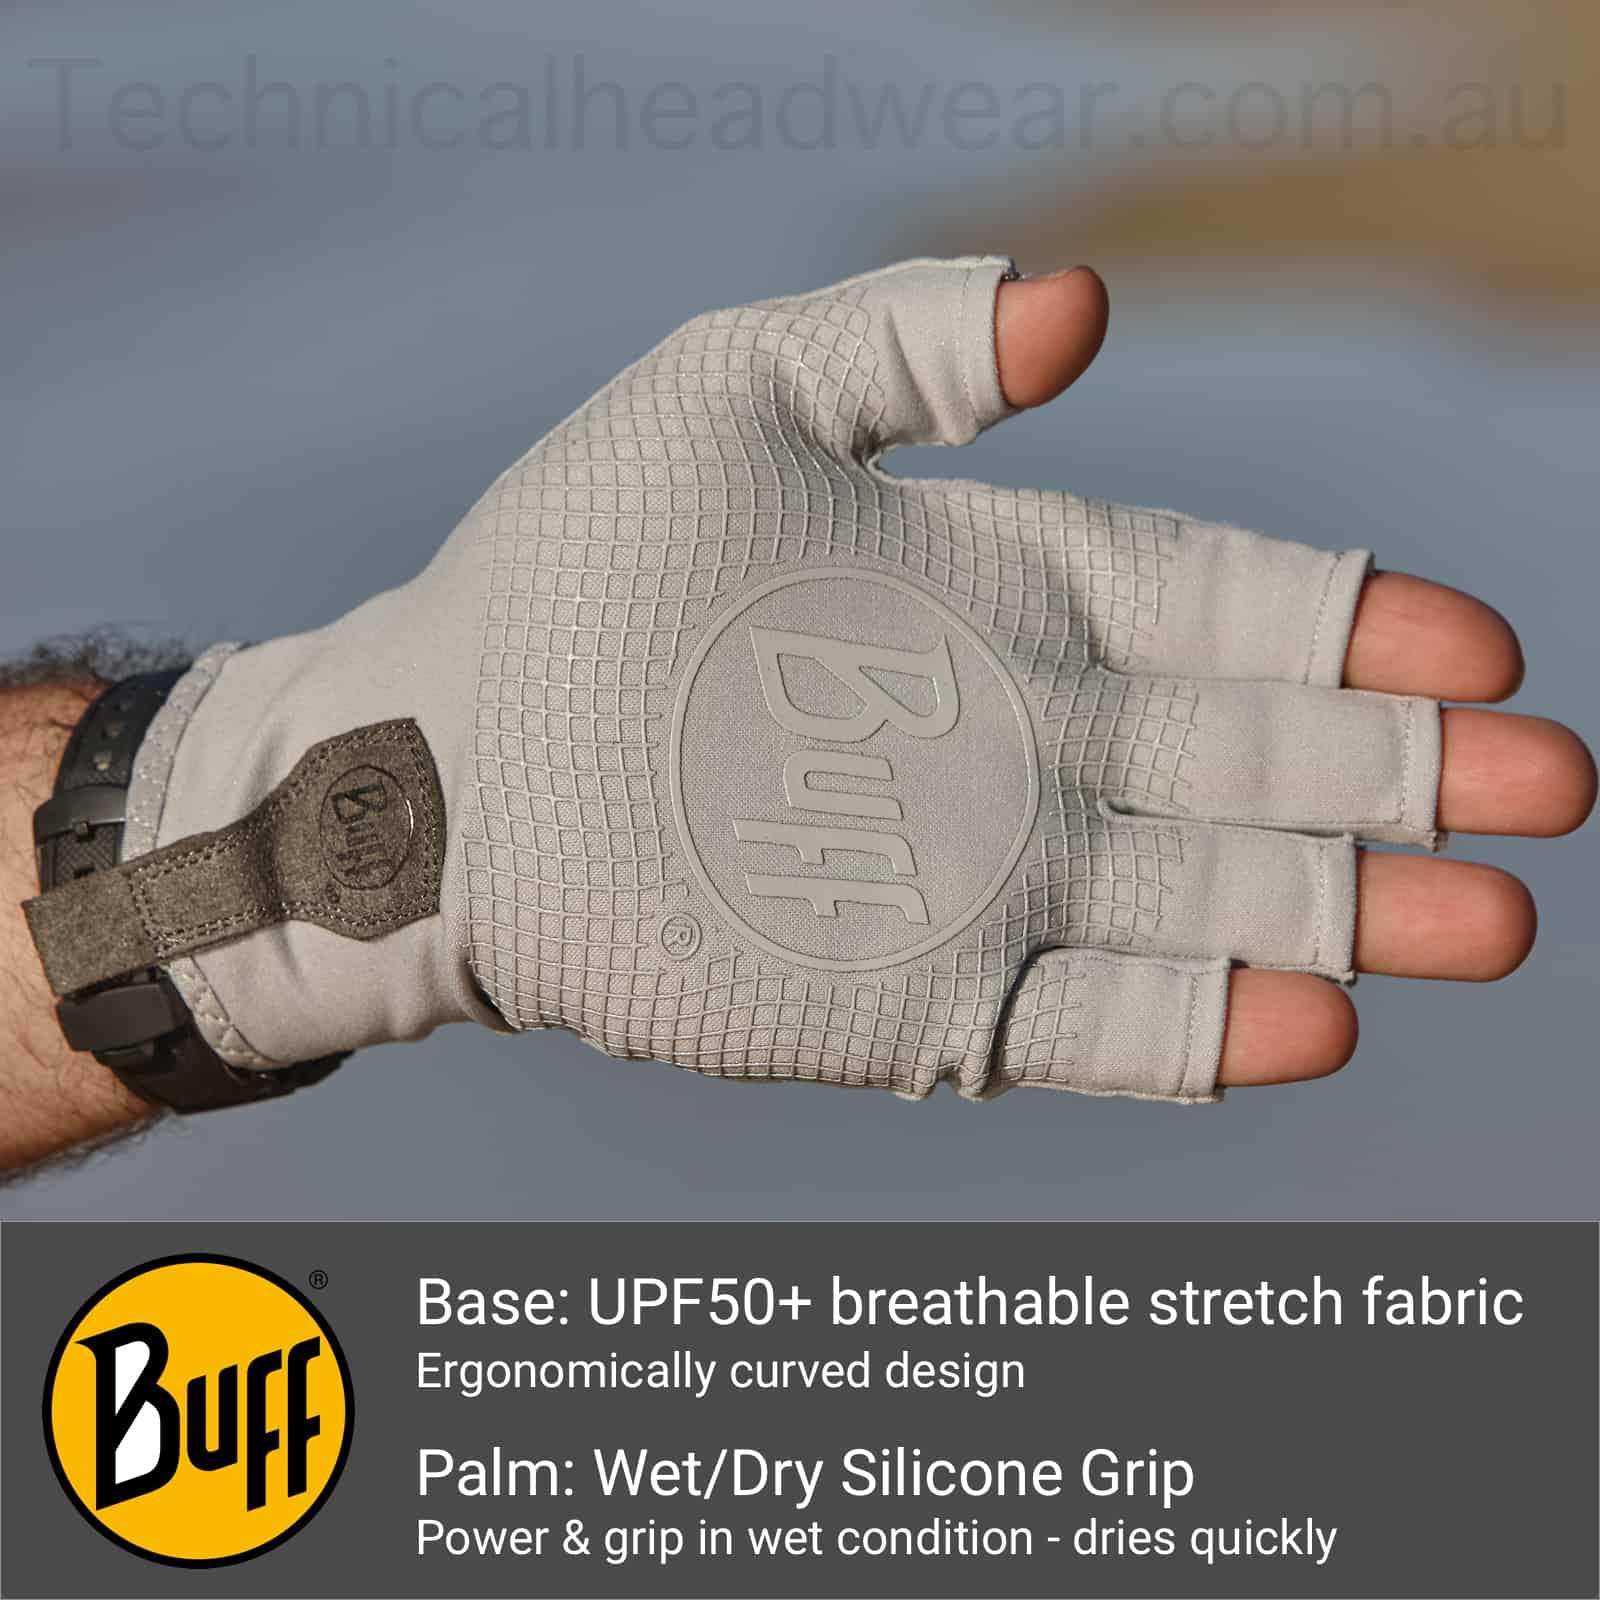 Buff Gloves Size Chart